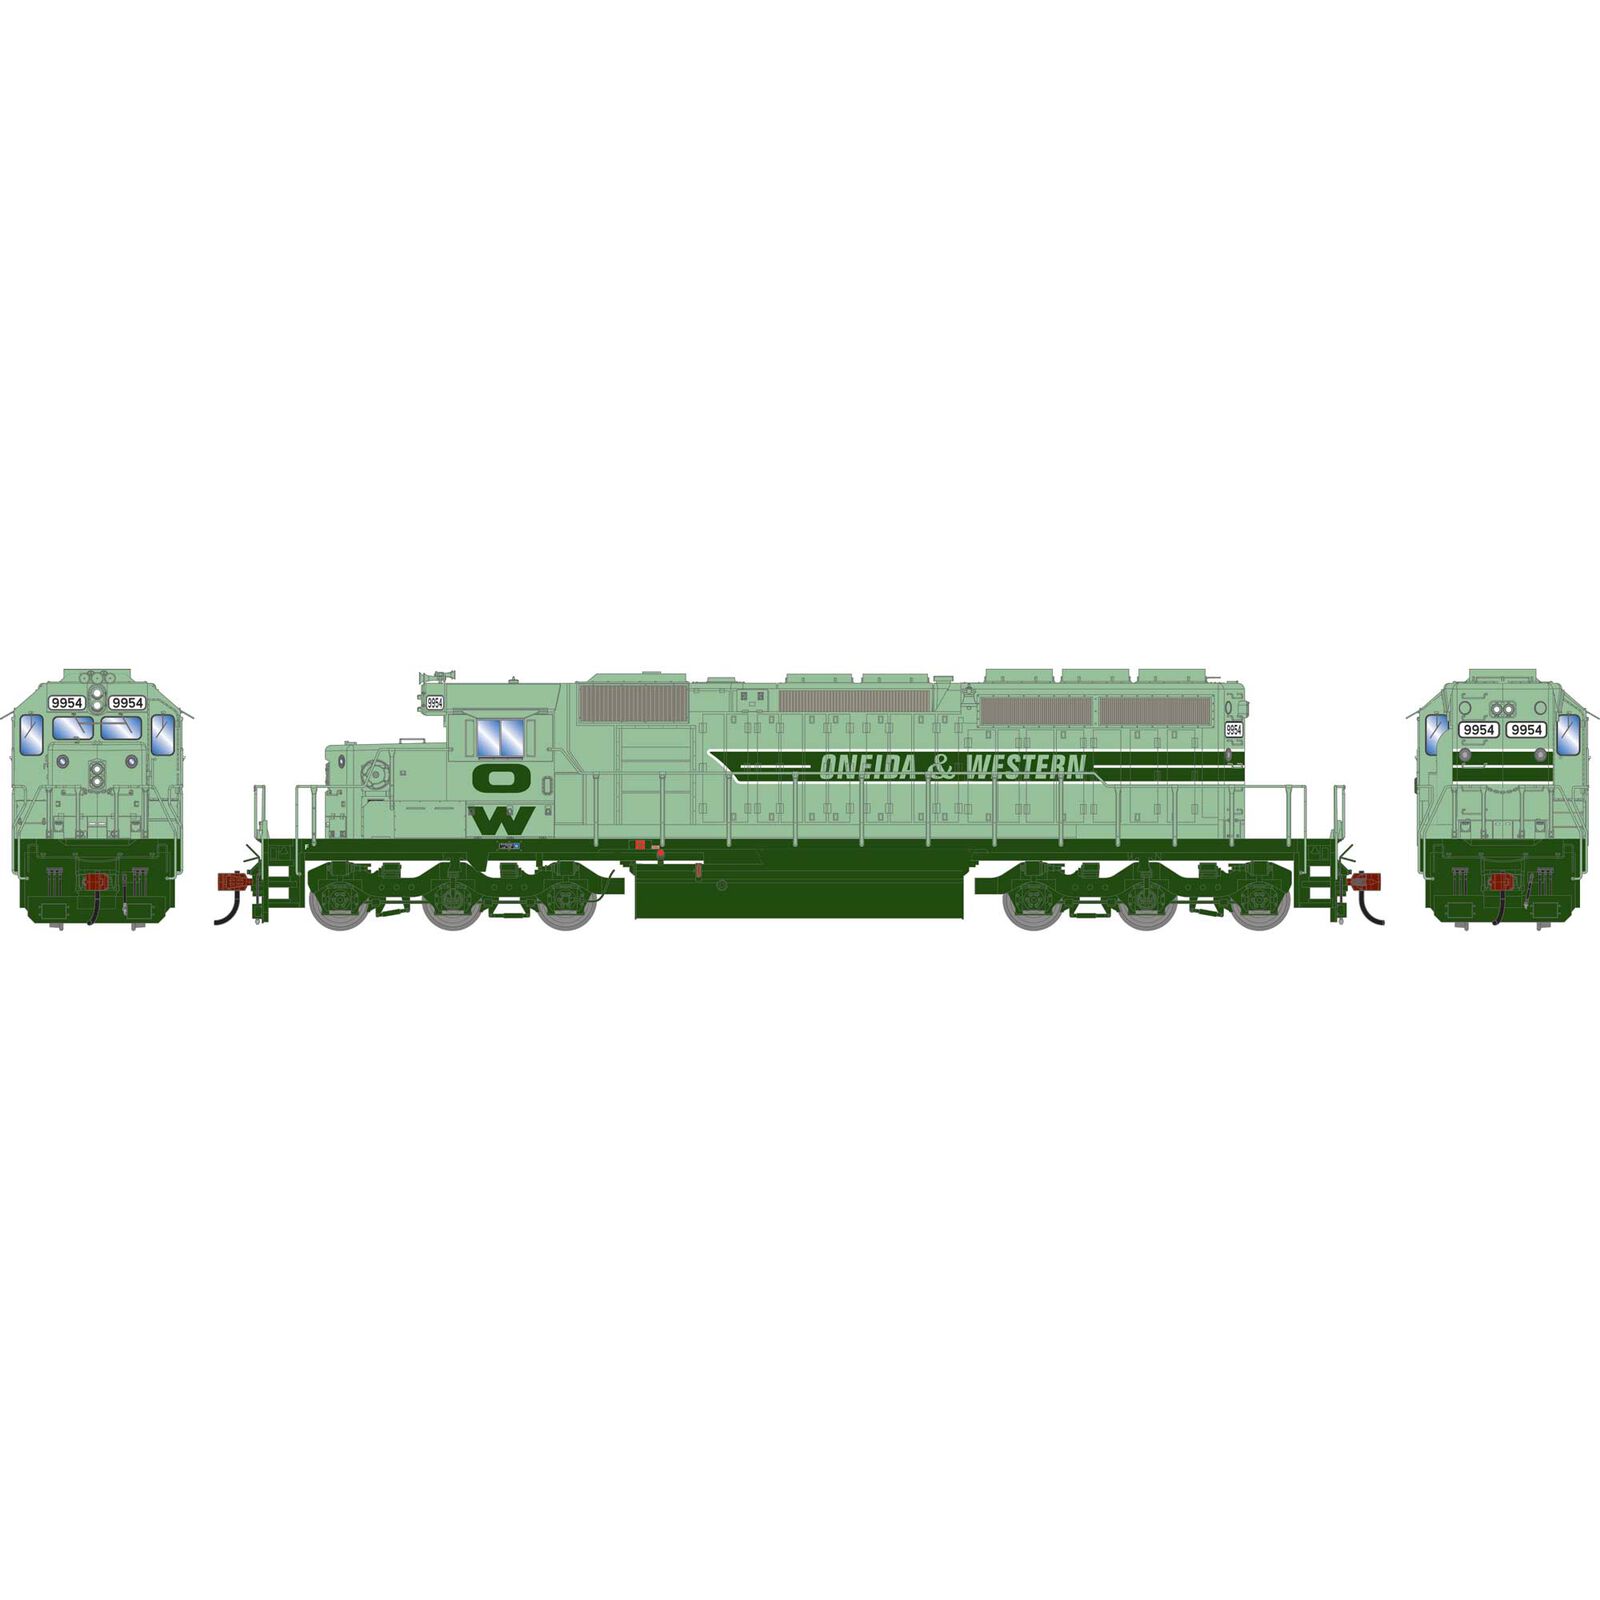 HO SD40-2 Locomotive with DCC & Sound, OWTX #9954